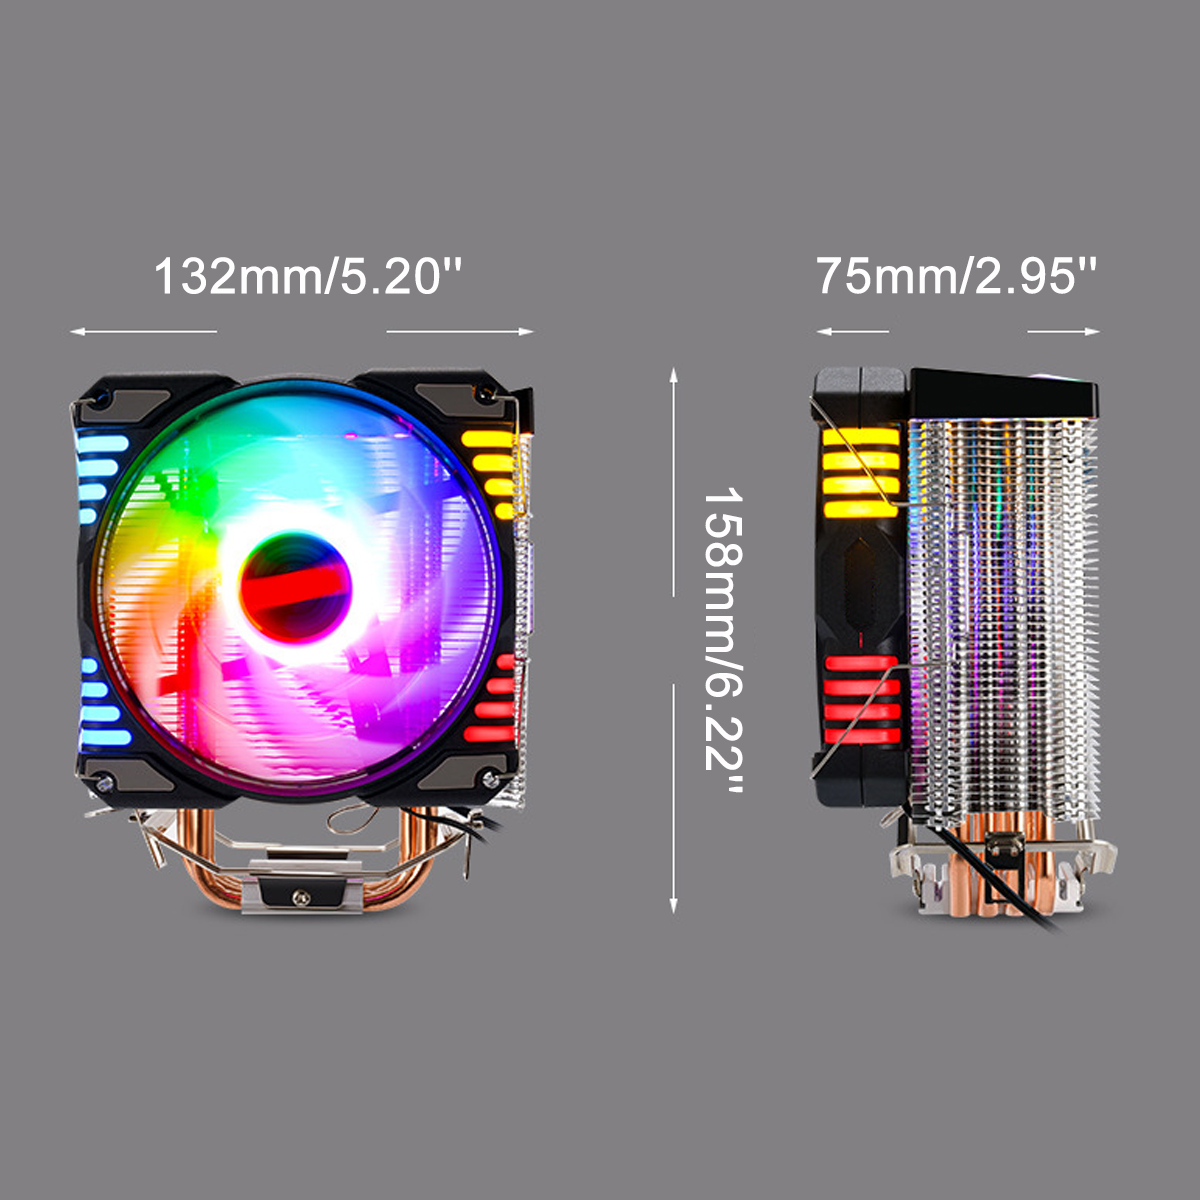 4-Heat-Pipe-RGB-CPU-Cooler-34-Pin-For-Intel-Socket-LGA-77511501151115511561200-AMD-Socket-1973061-8